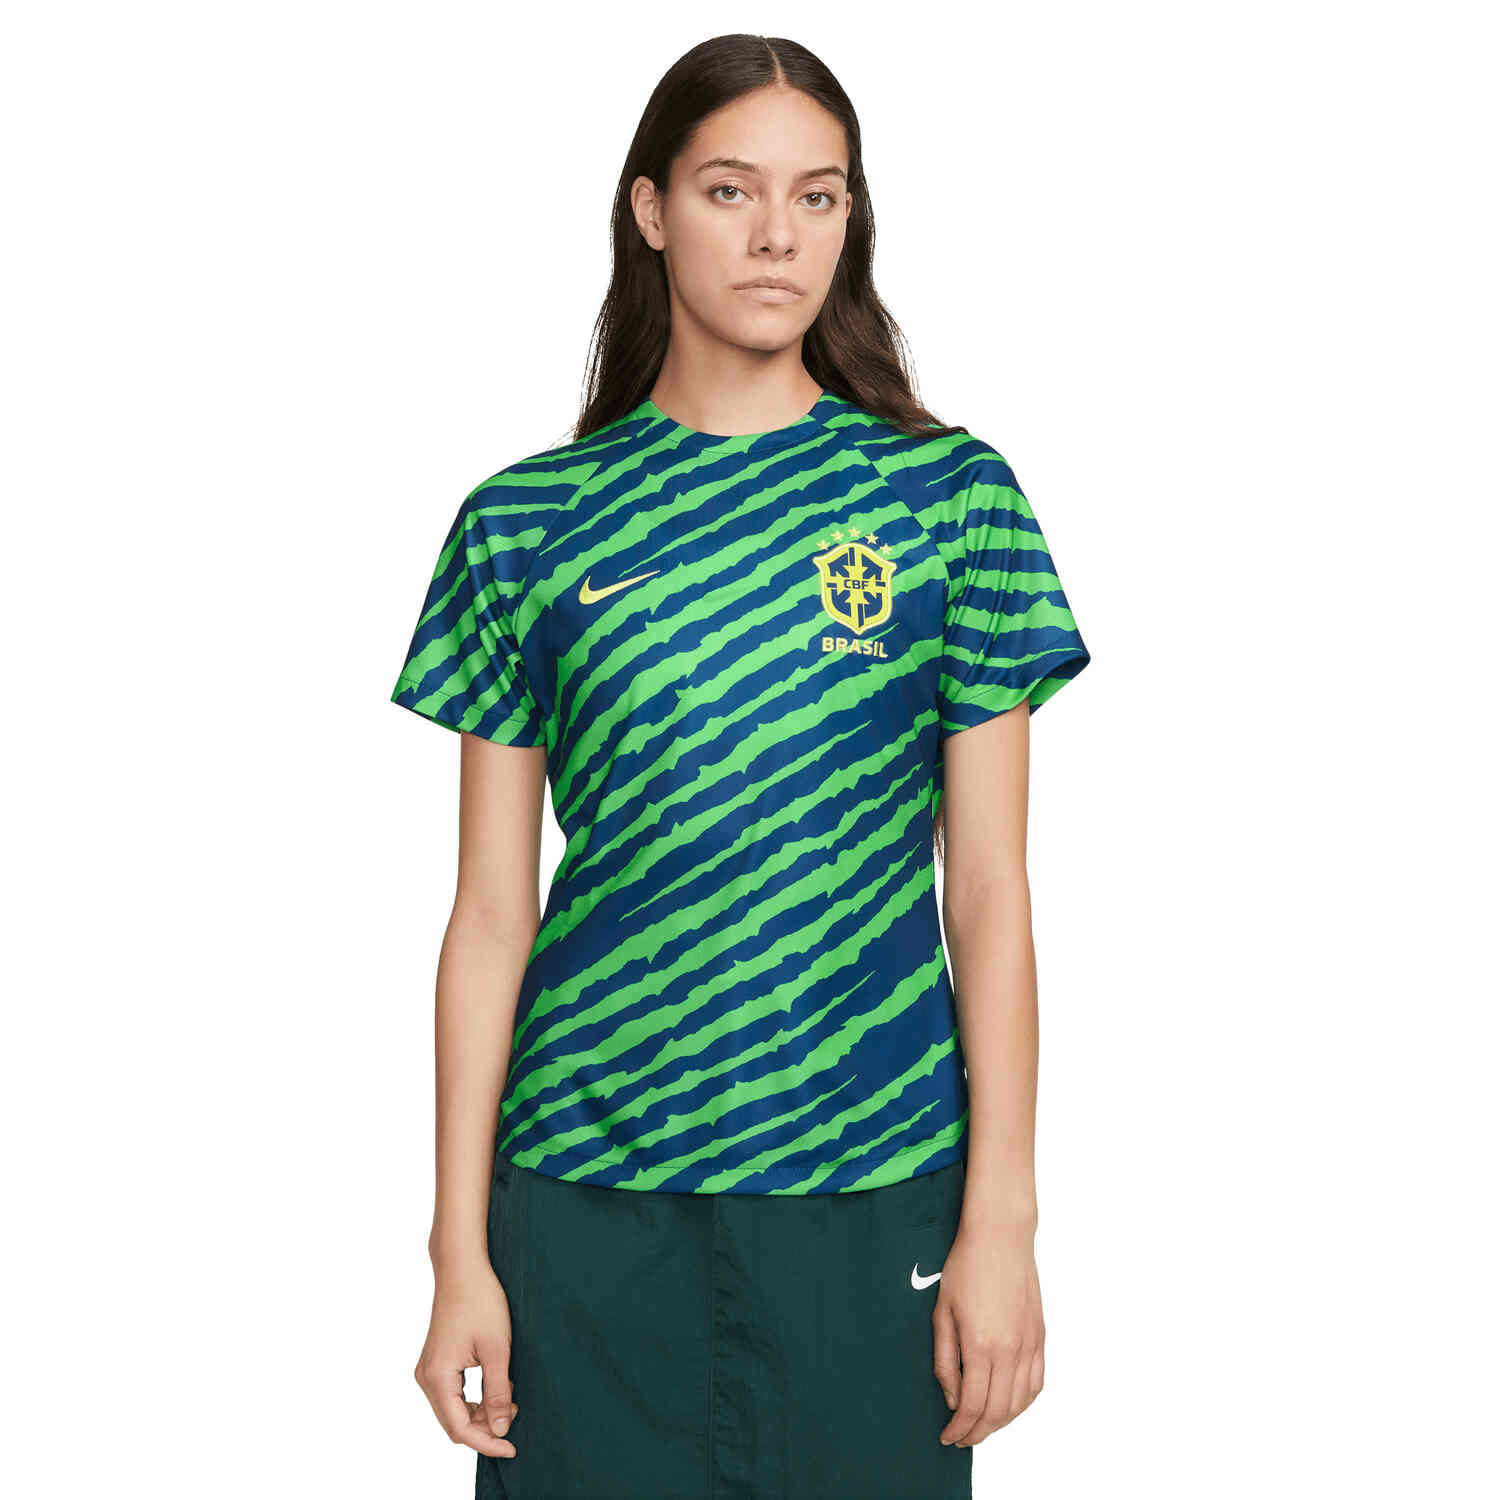 Nike, Shirts, Nike Brasil Brazil Blue Training Pre Match Soccer Jersey